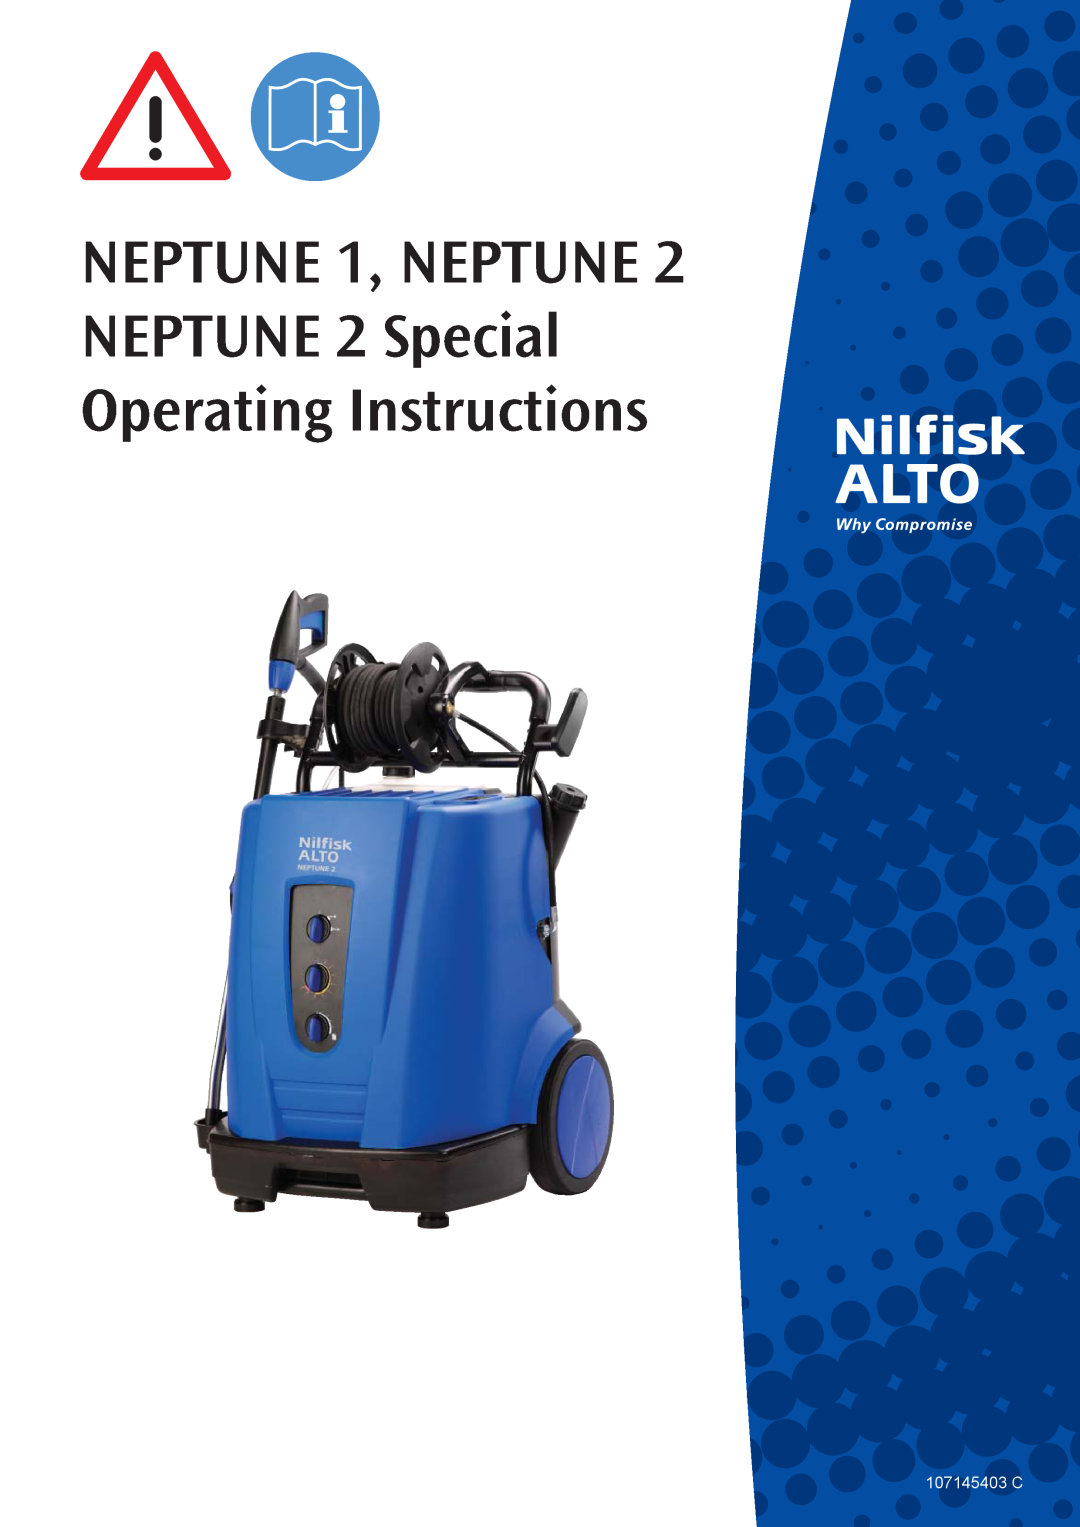 Nilfisk-ALTO manual NEPTUNE 1, NEPTUNE NEPTUNE 2 Special Operating Instructions, 107145403 C 